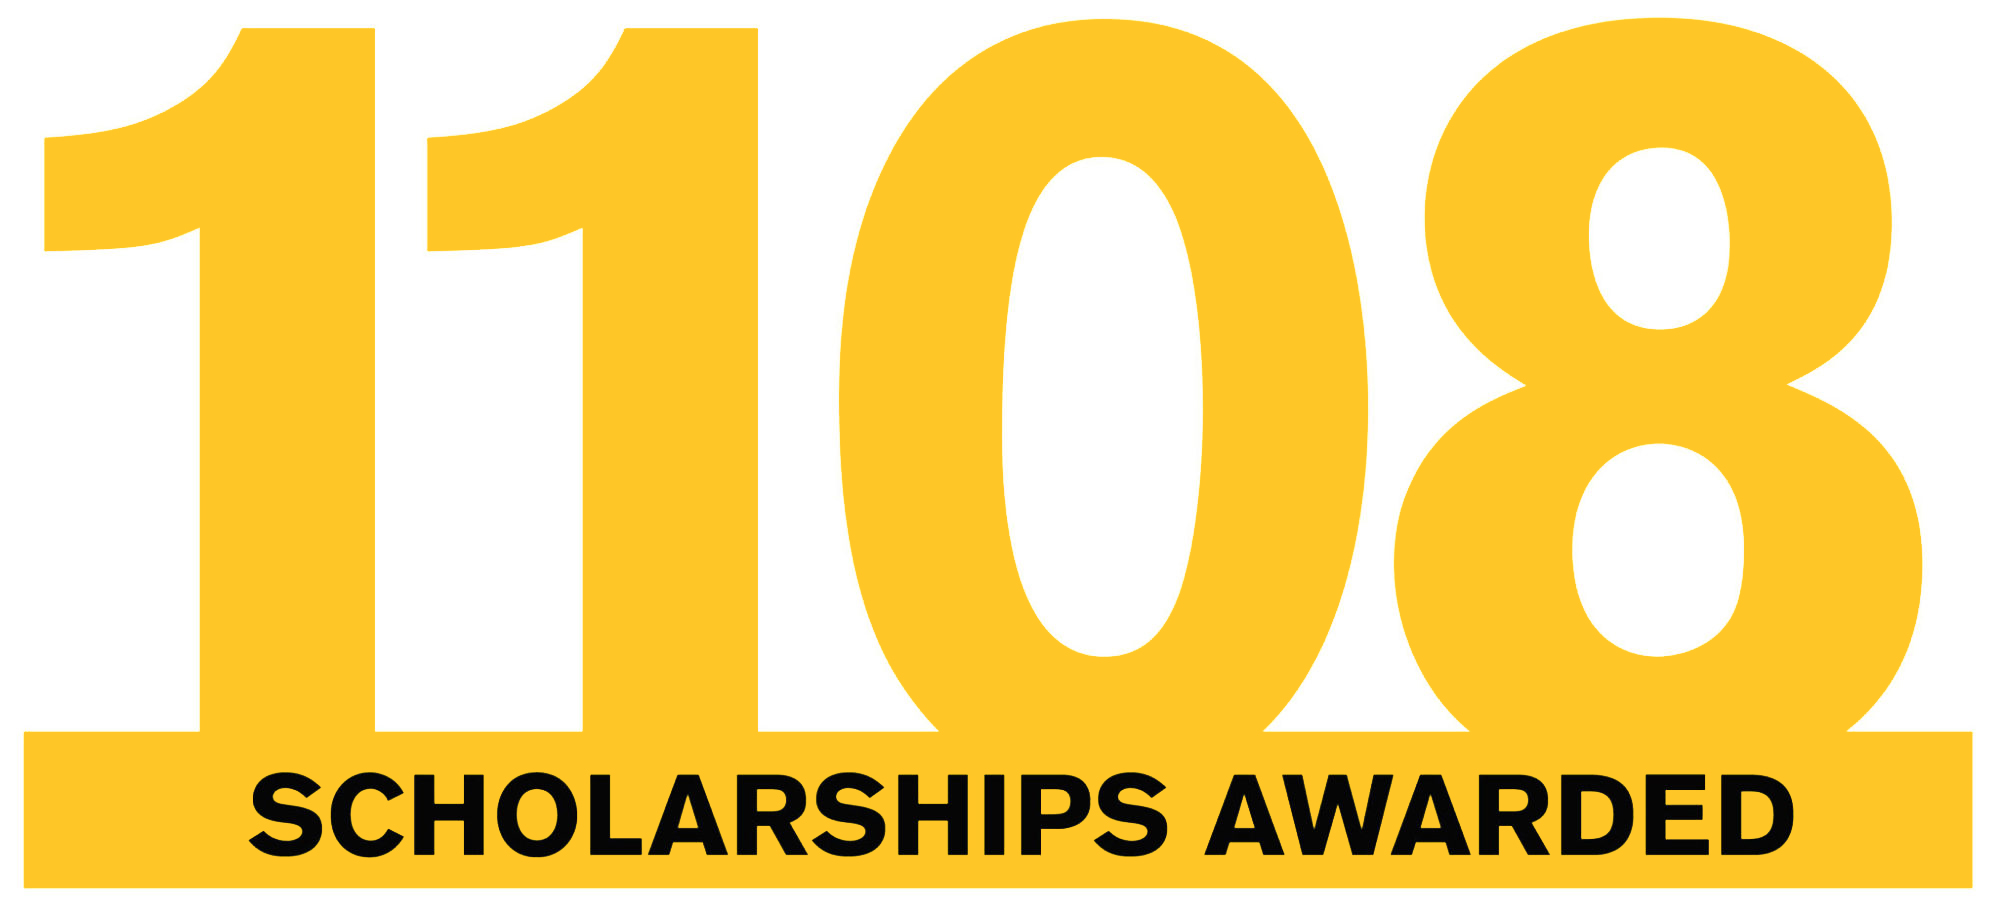 1108 scholarships awarded